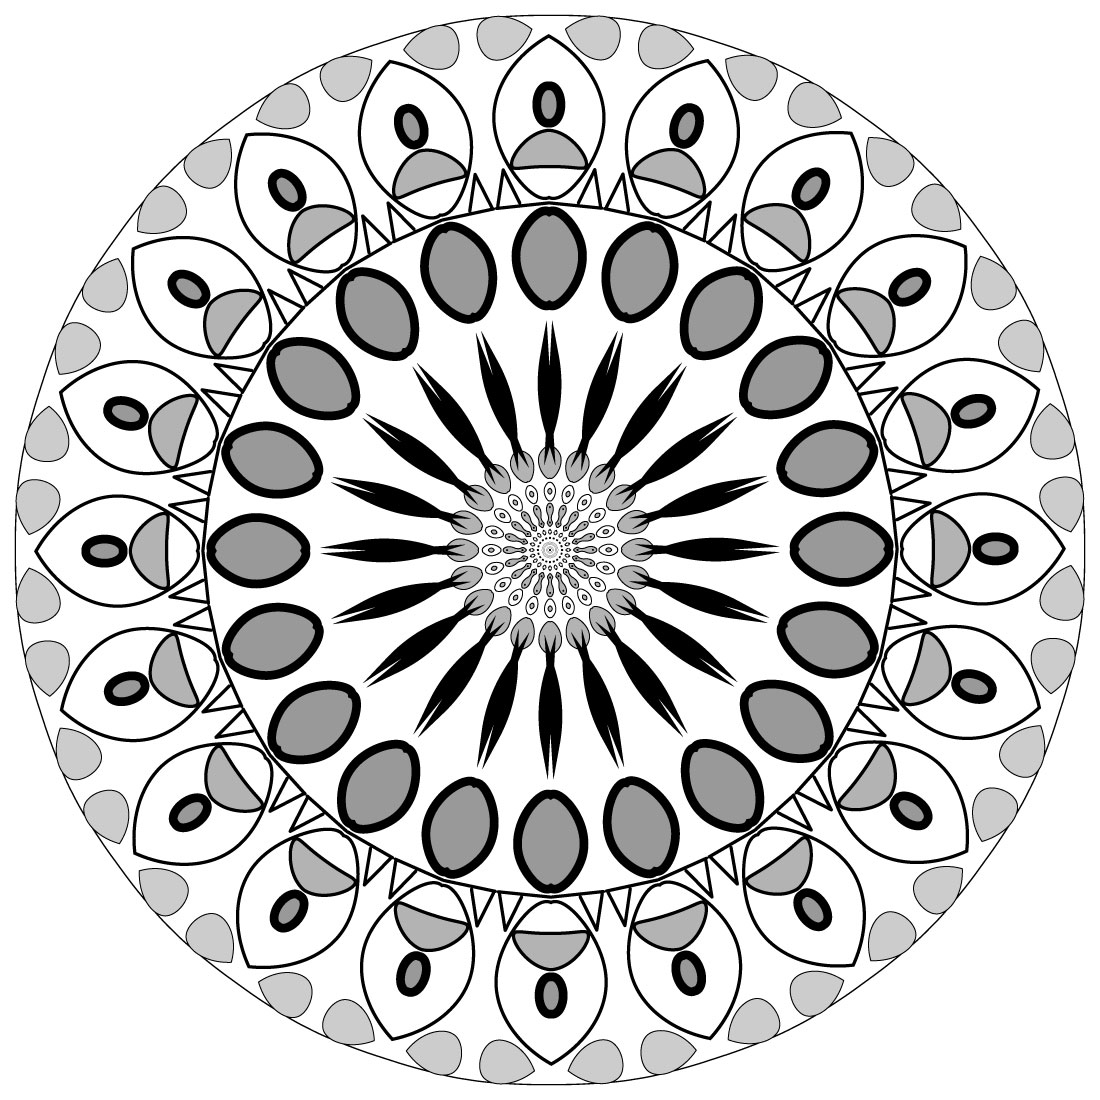 Mandala art with black and gray Petals preview image.